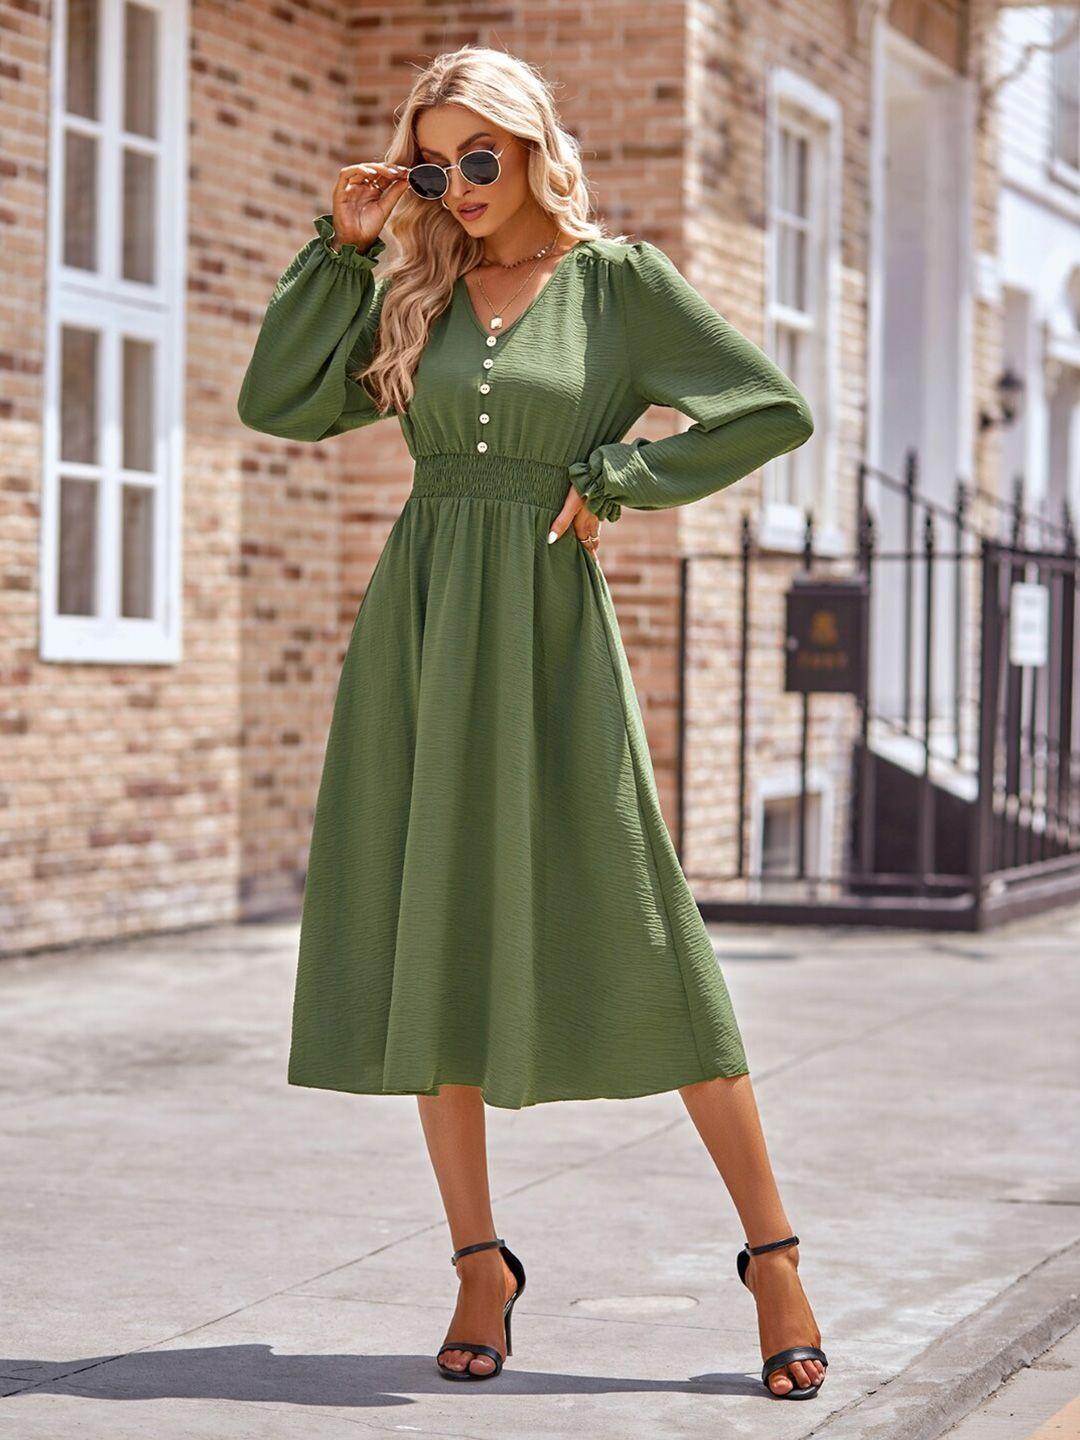 stylecast green a-line midi dress